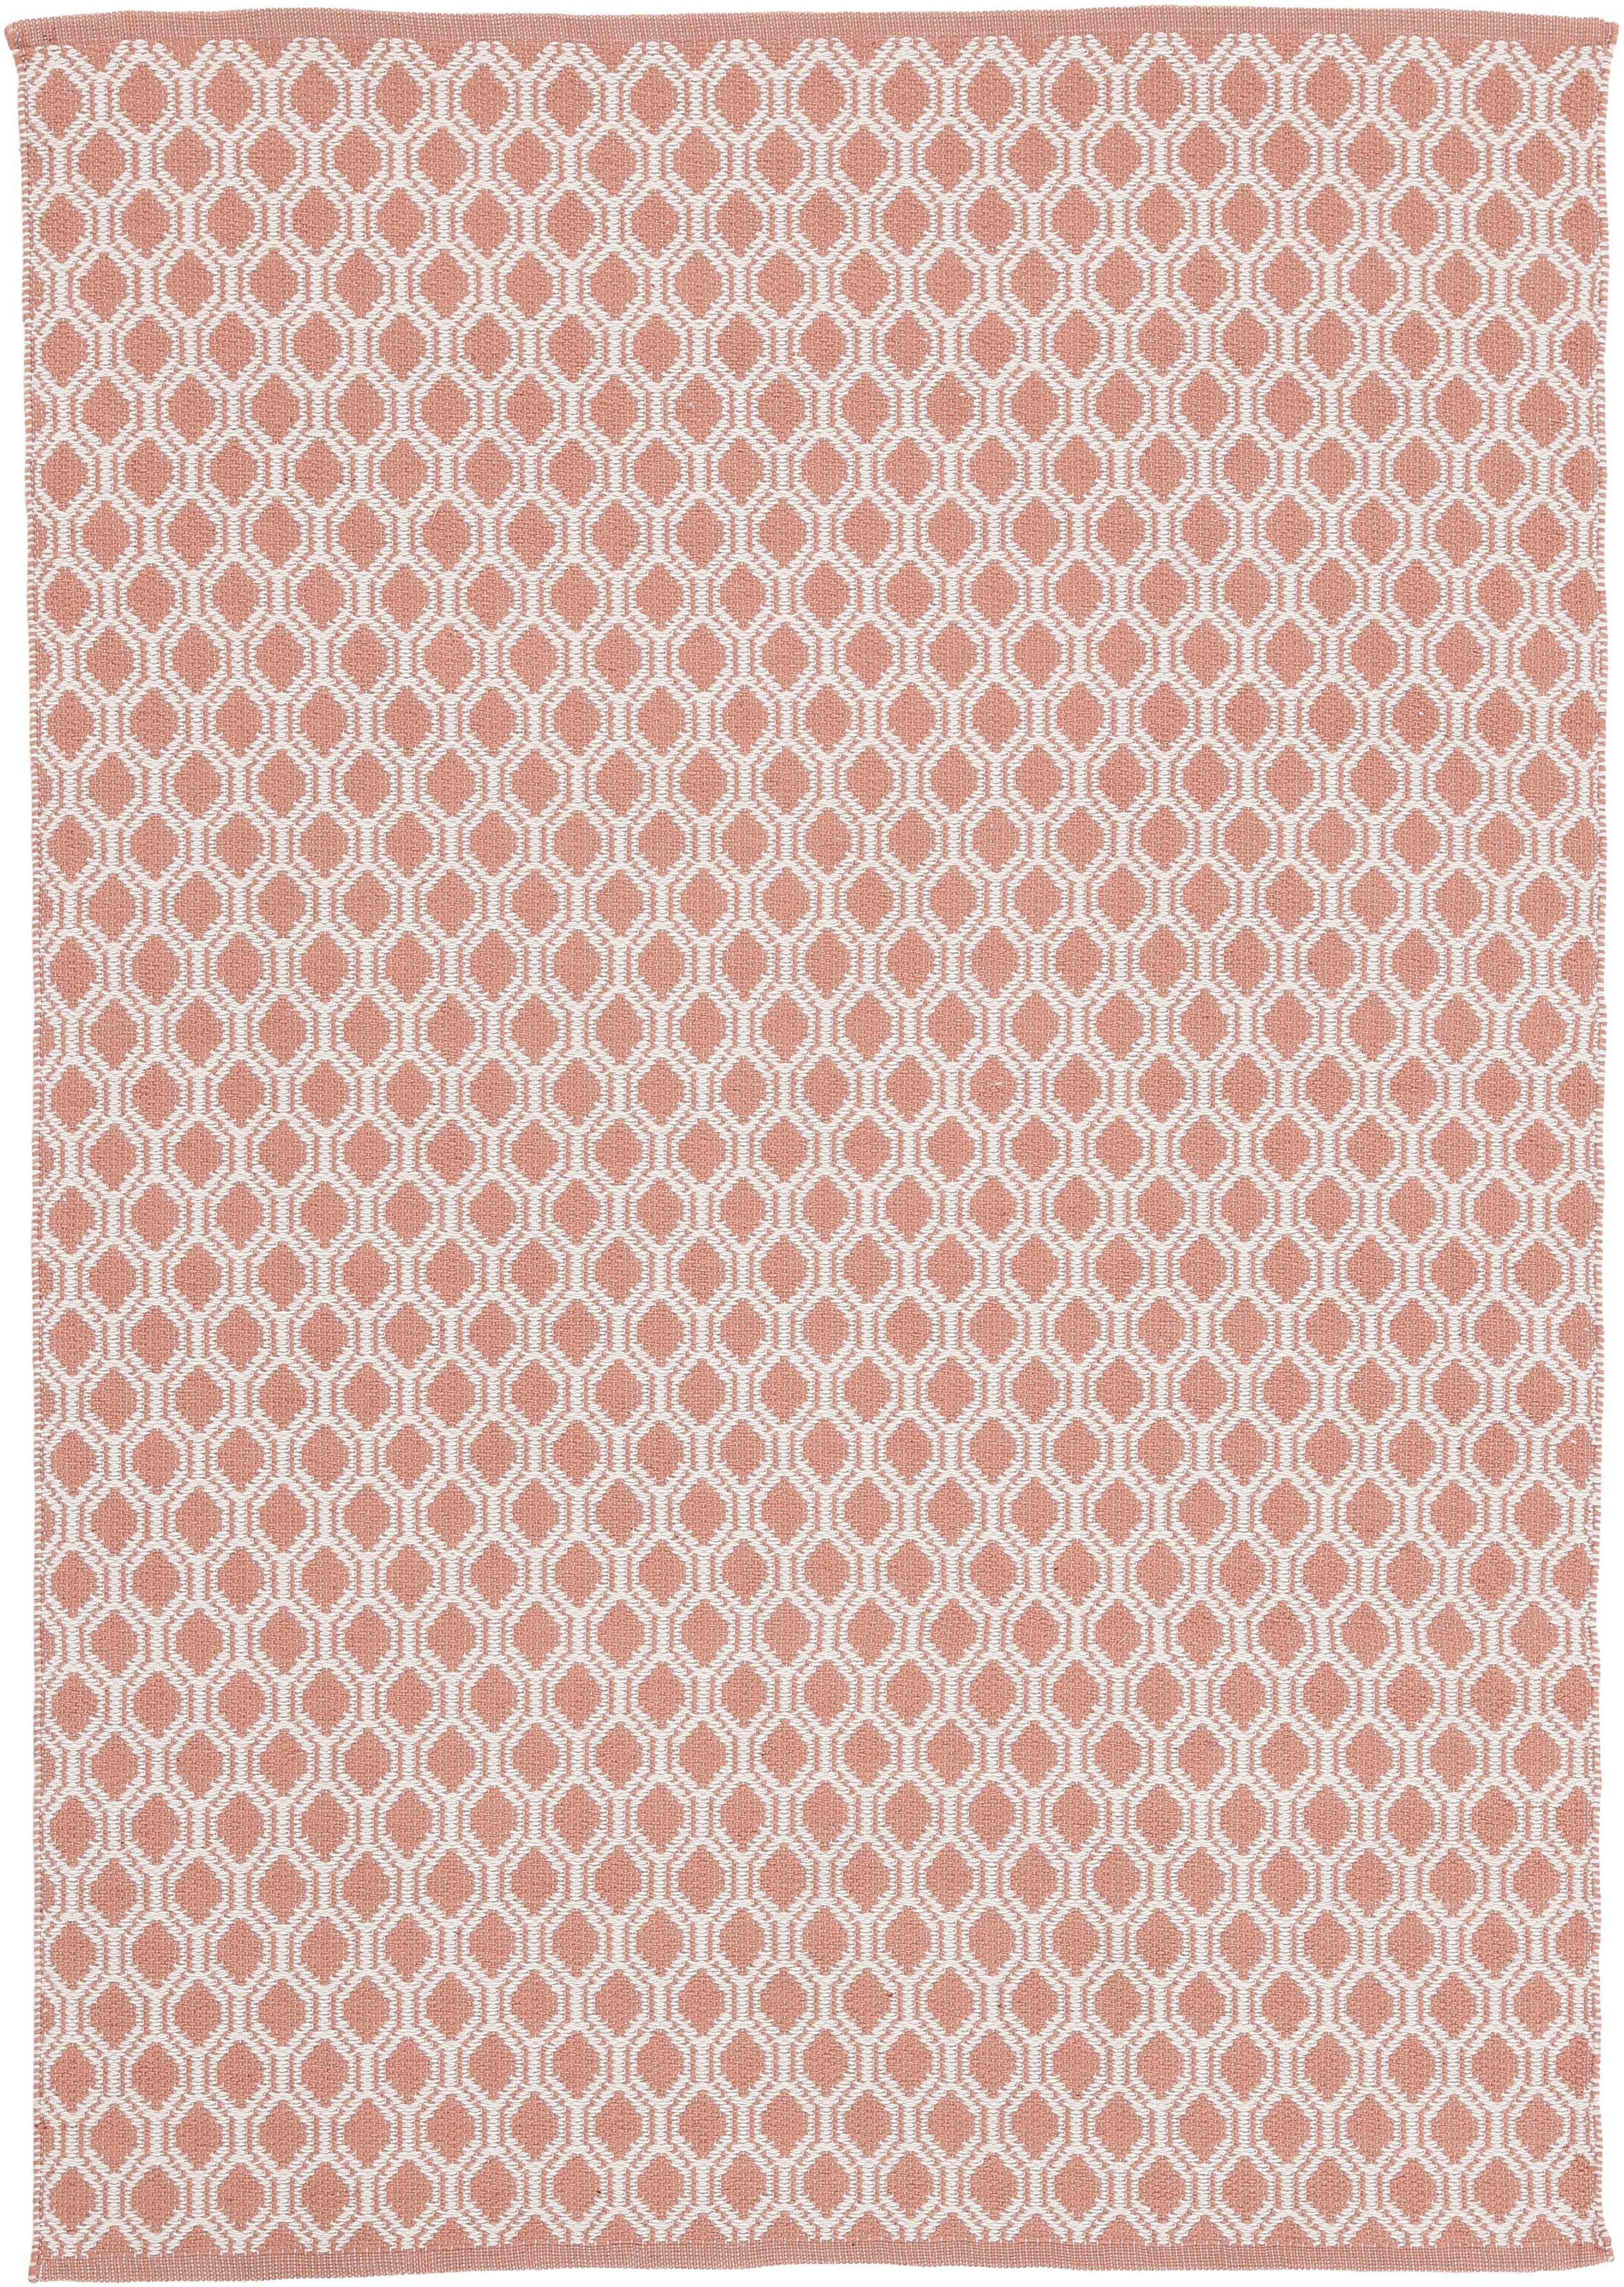 Teppich Frida 204, carpetfine, rechteckig, Höhe: 7 mm, Wendeteppich, 100% recyceltem Material (PET), Flachgewebe, Sisal Optik rosa